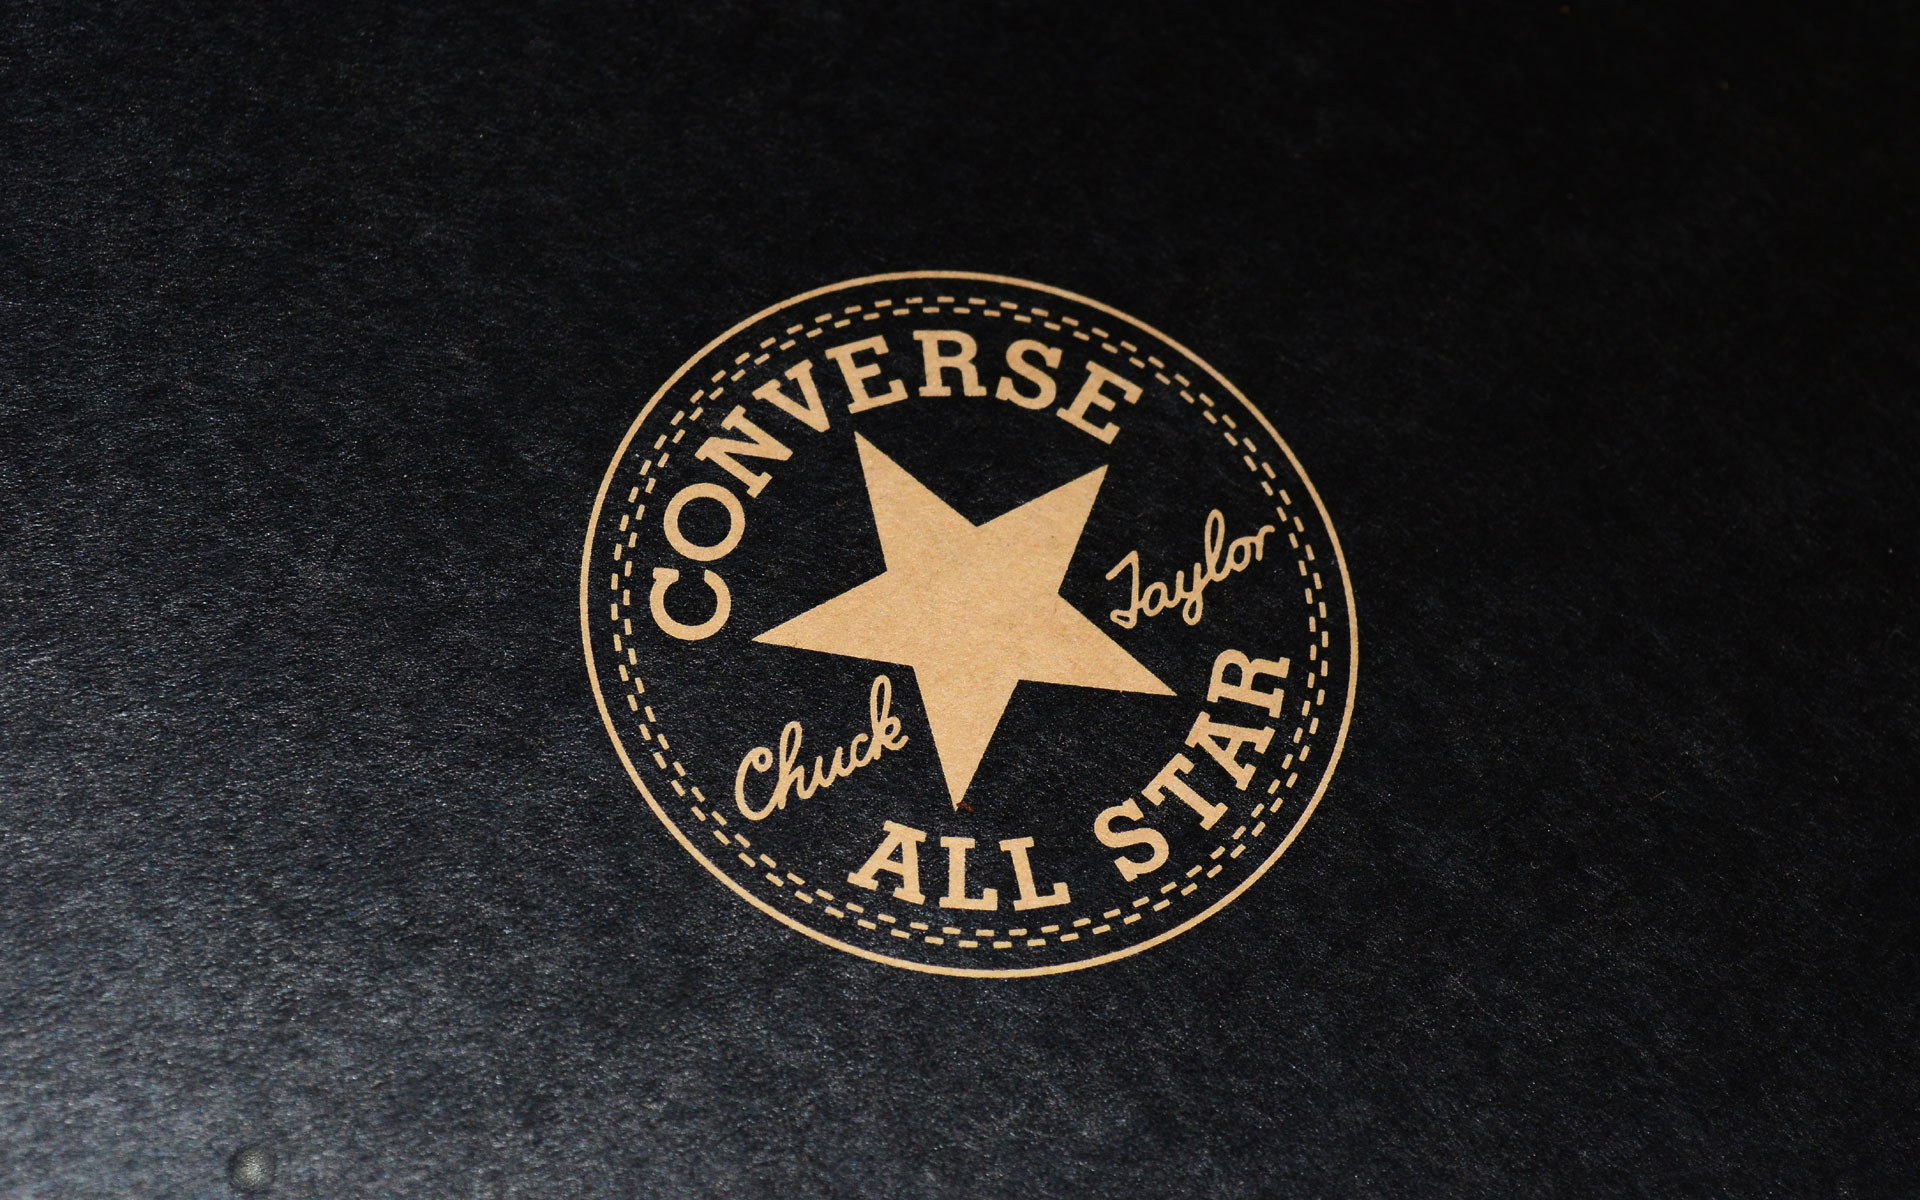 Converse Logo Wallpaper